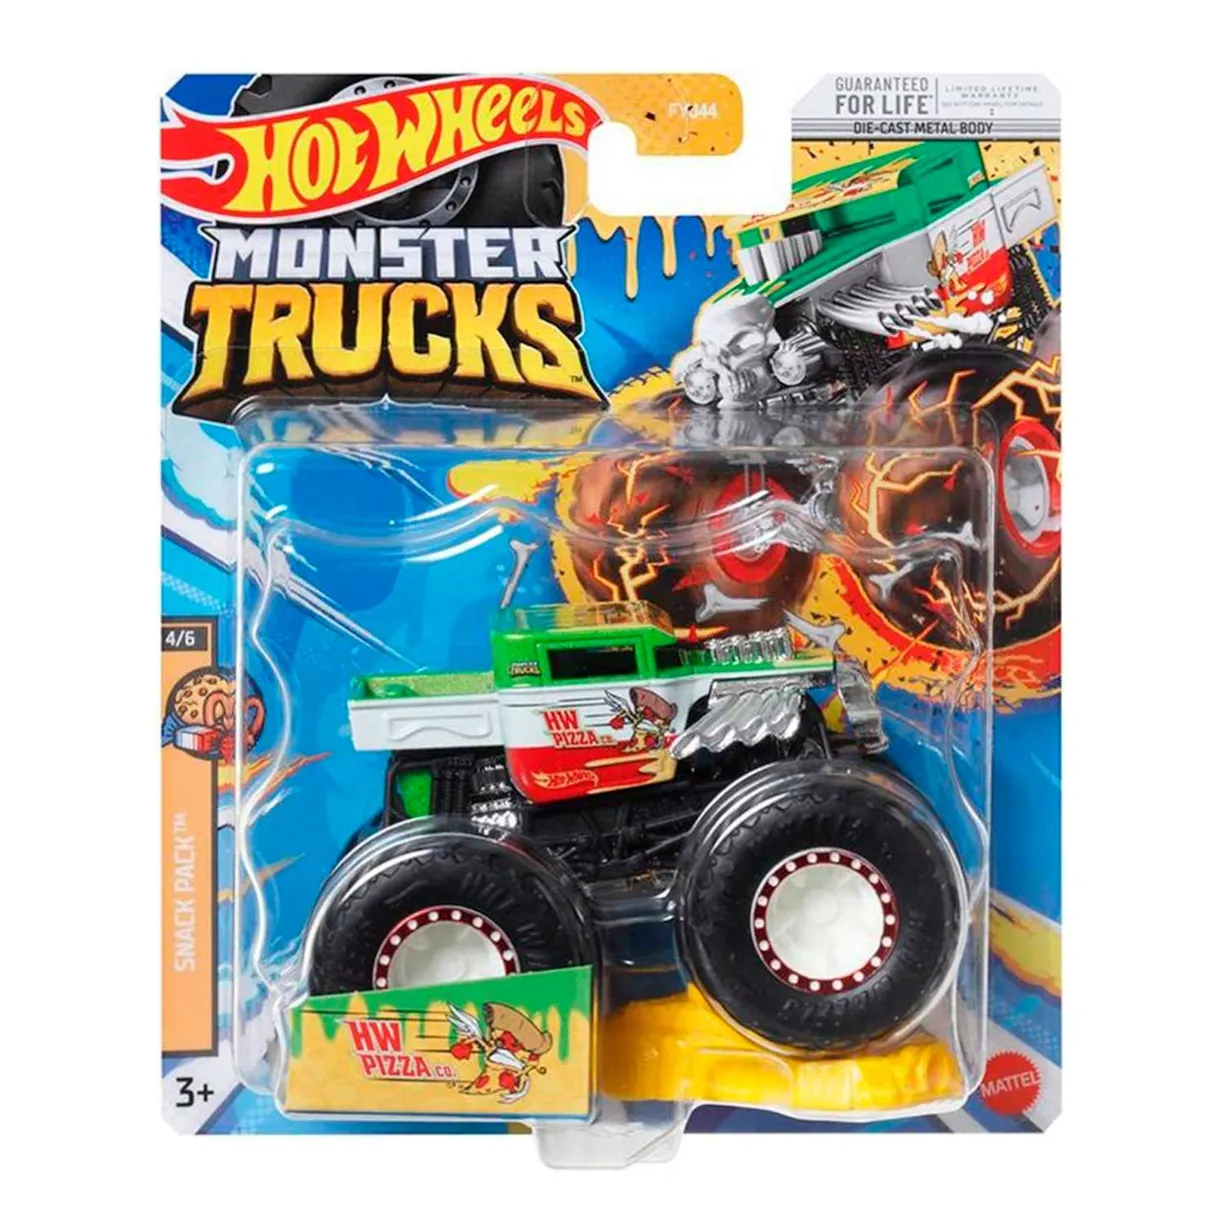 Машинка Hot Wheels Monster HW PIZZA CO. 1:64 HNW18